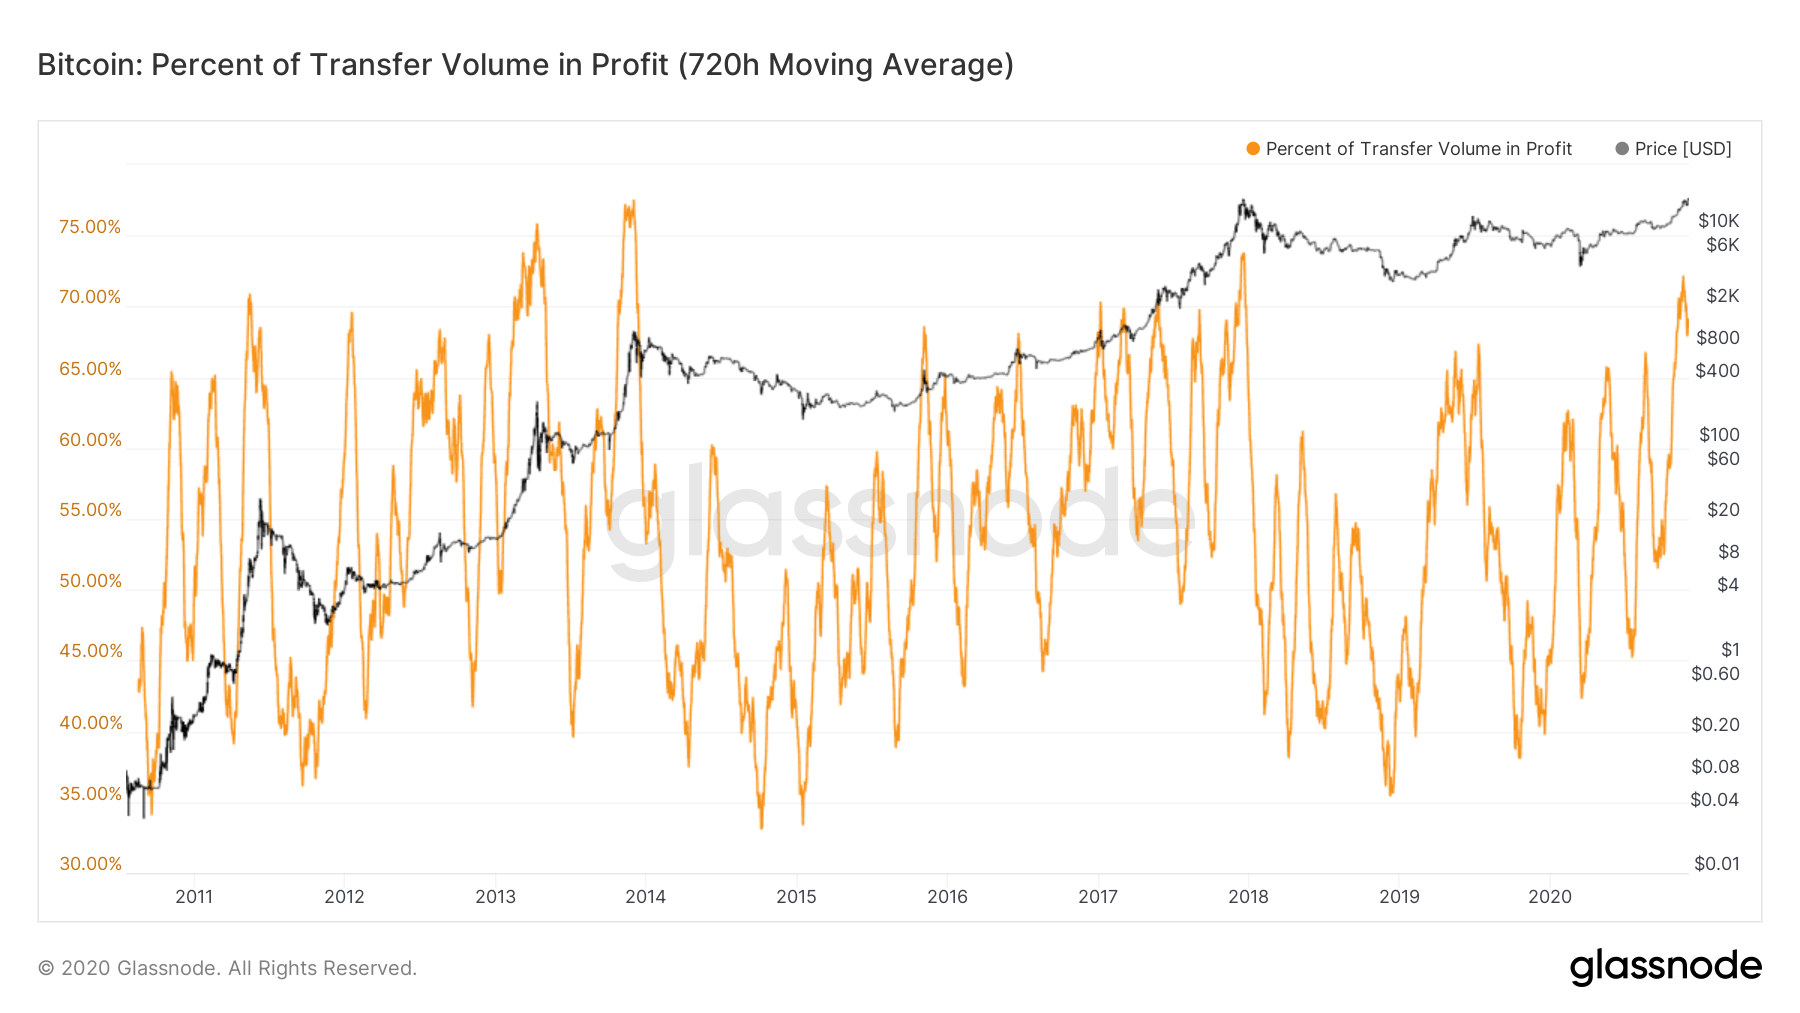 Bitcoin percentage of transfer volume in profit chart